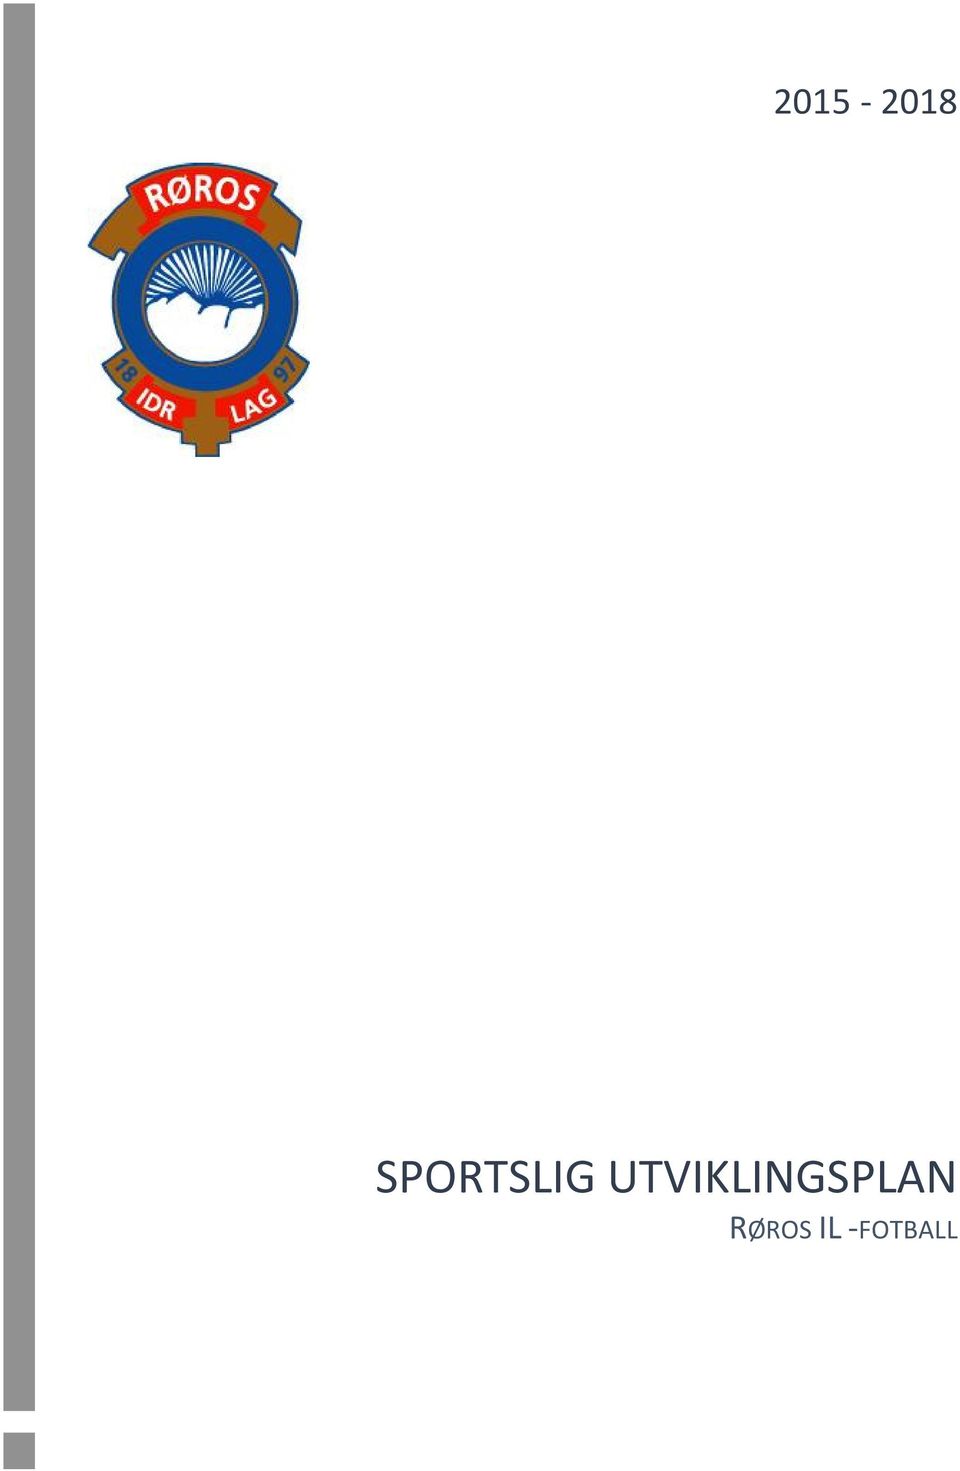 SPORTSLIG UTVIKLINGSPLAN RØROS IL -FOTBALL - PDF Free Download